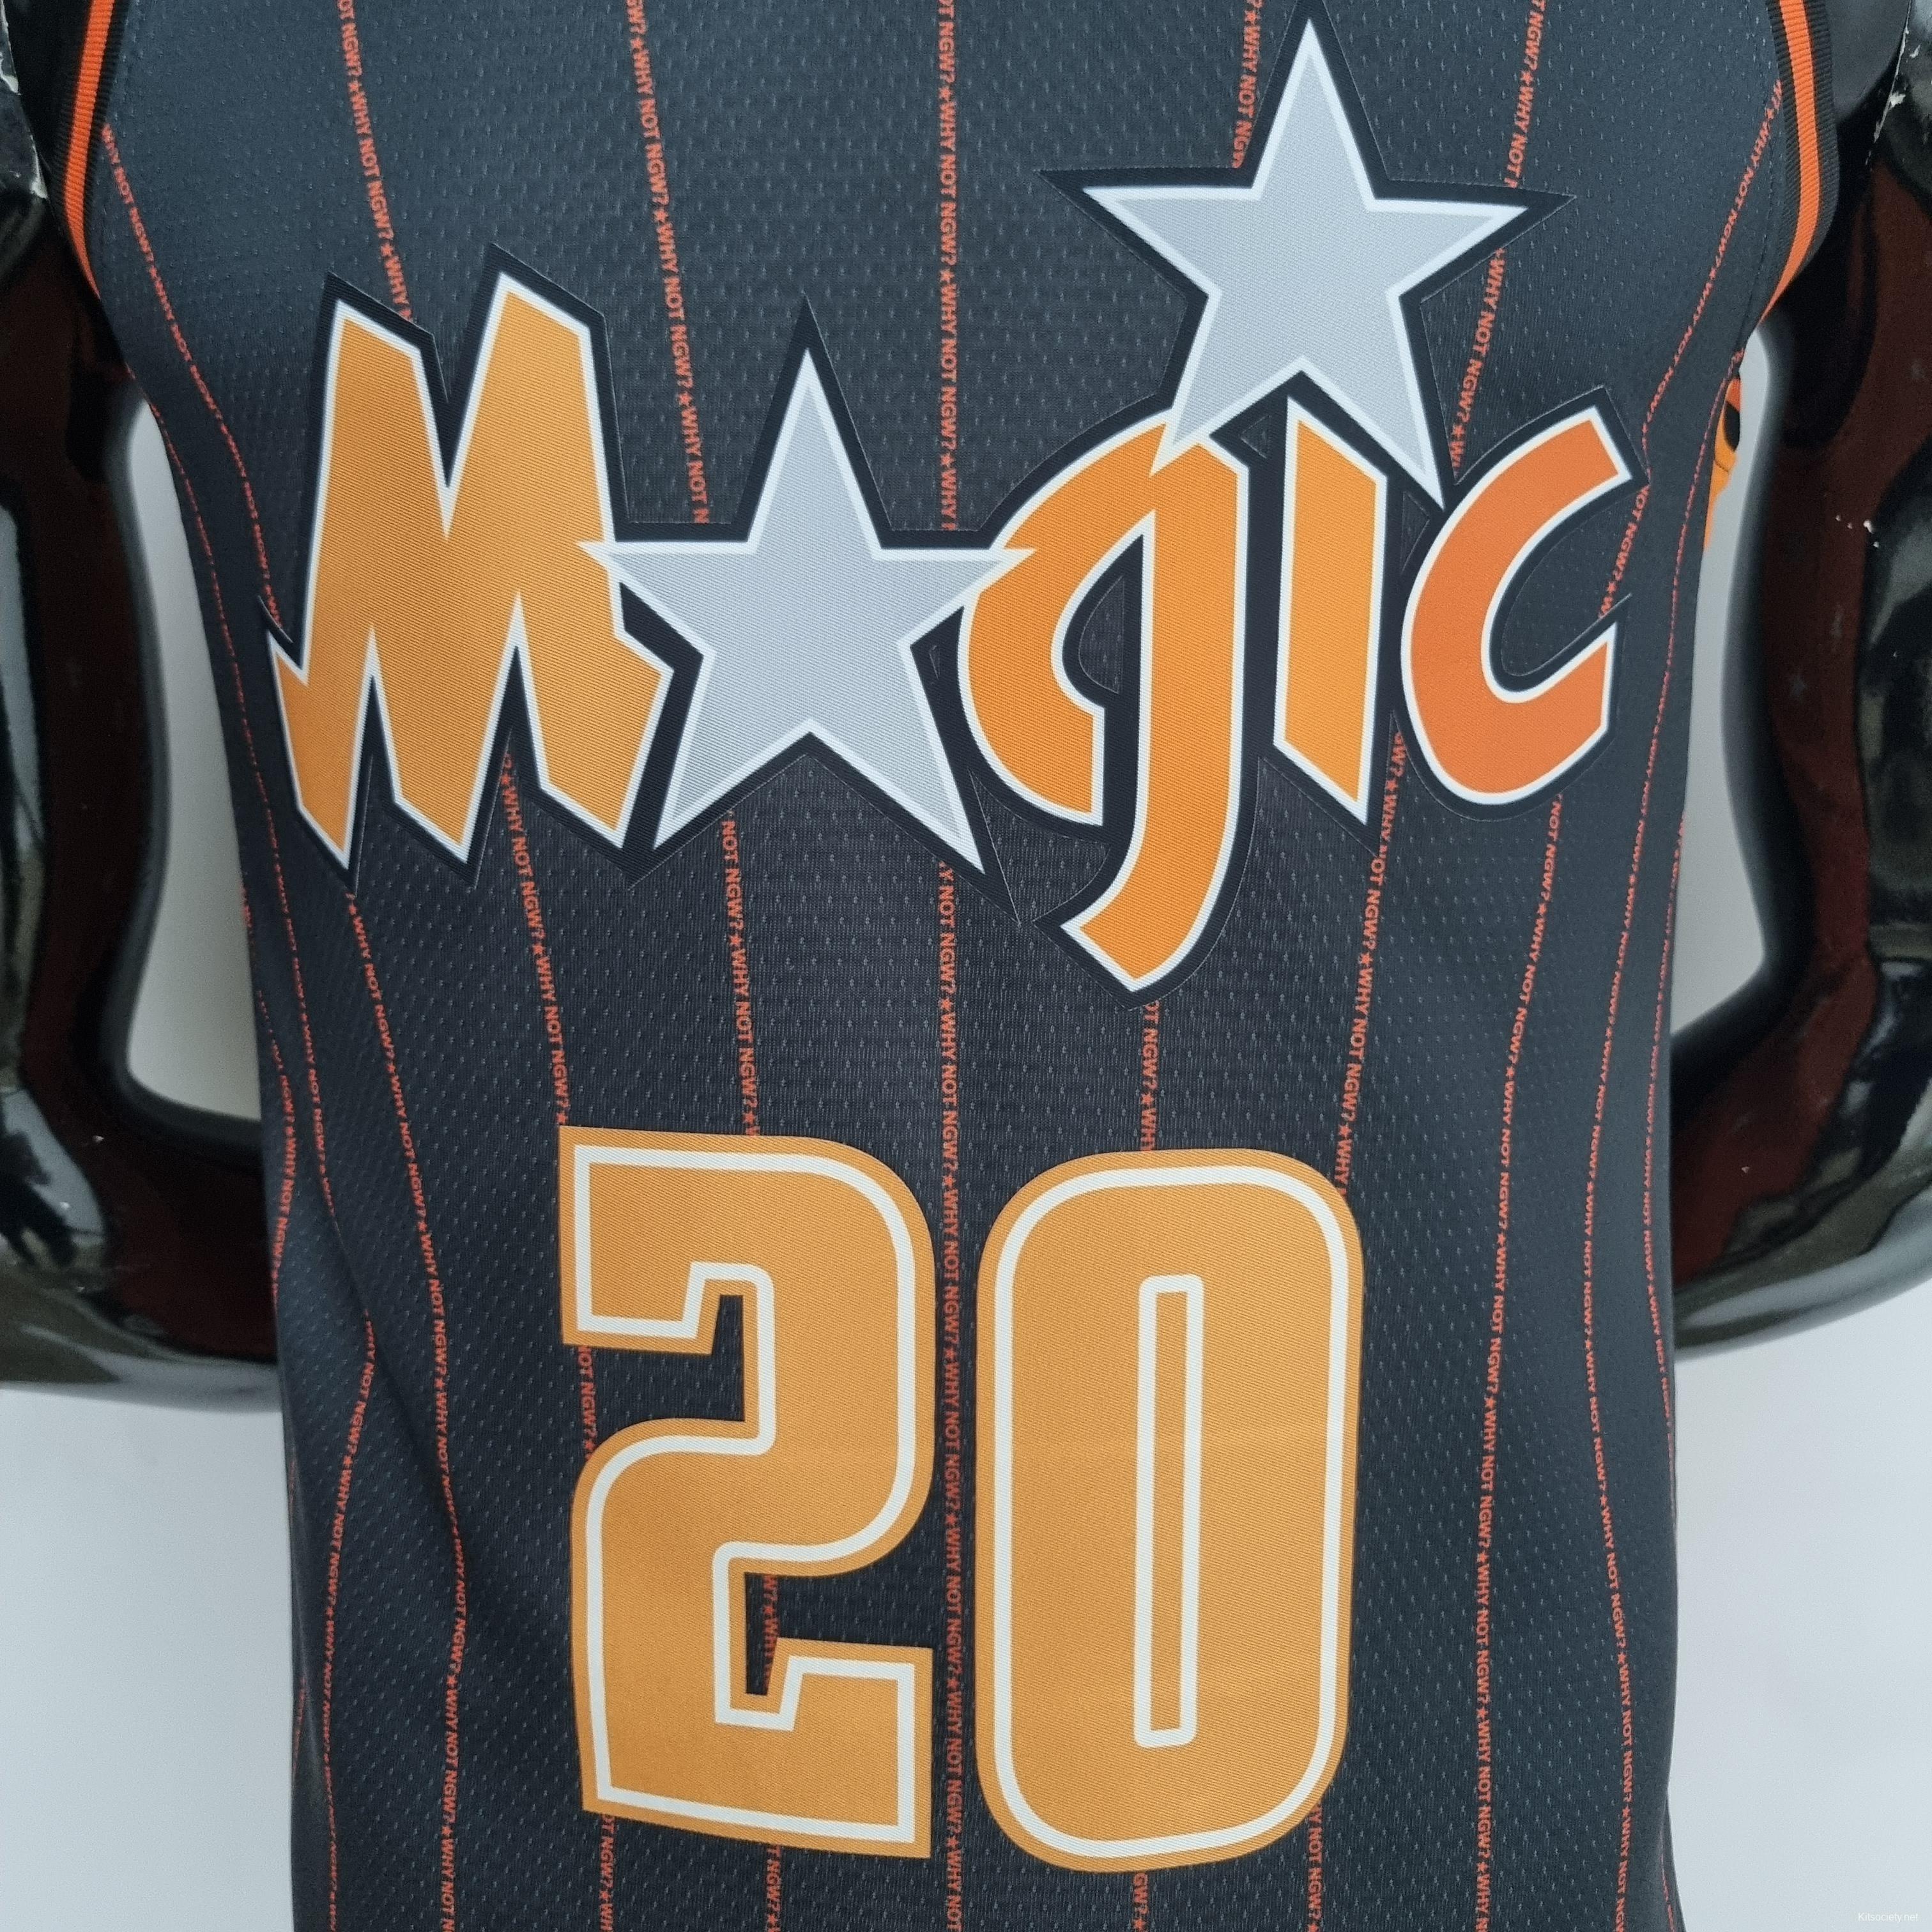 75th Anniversary Orlando Magic Fultz #20 White Orange NBA Jersey -  Kitsociety